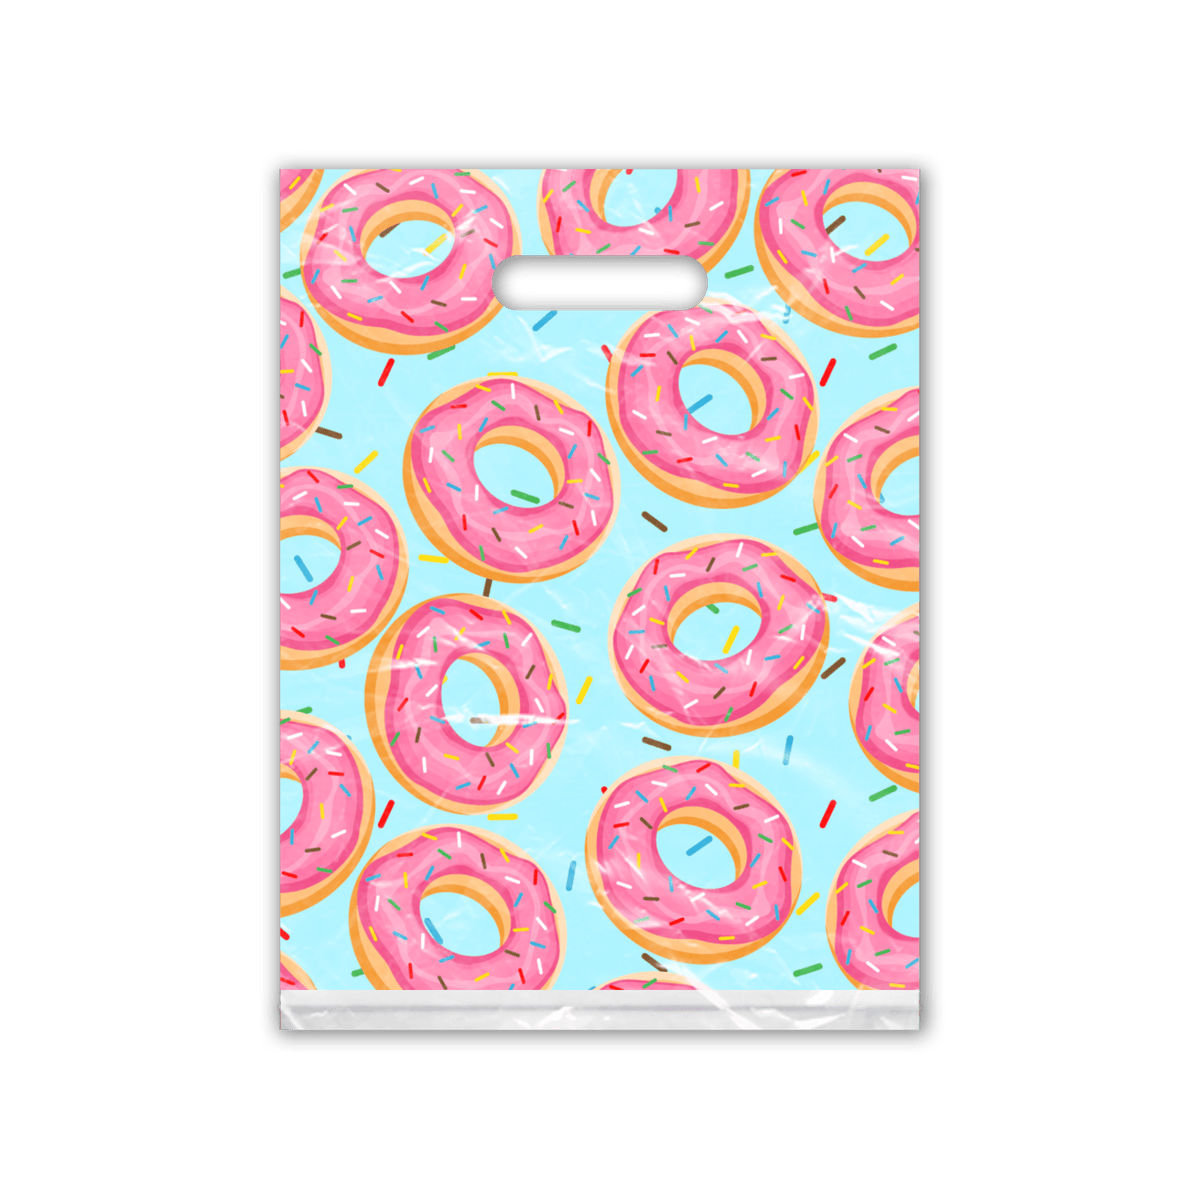 Donut Printed Designer Merchandise Bags Pro Supply Global